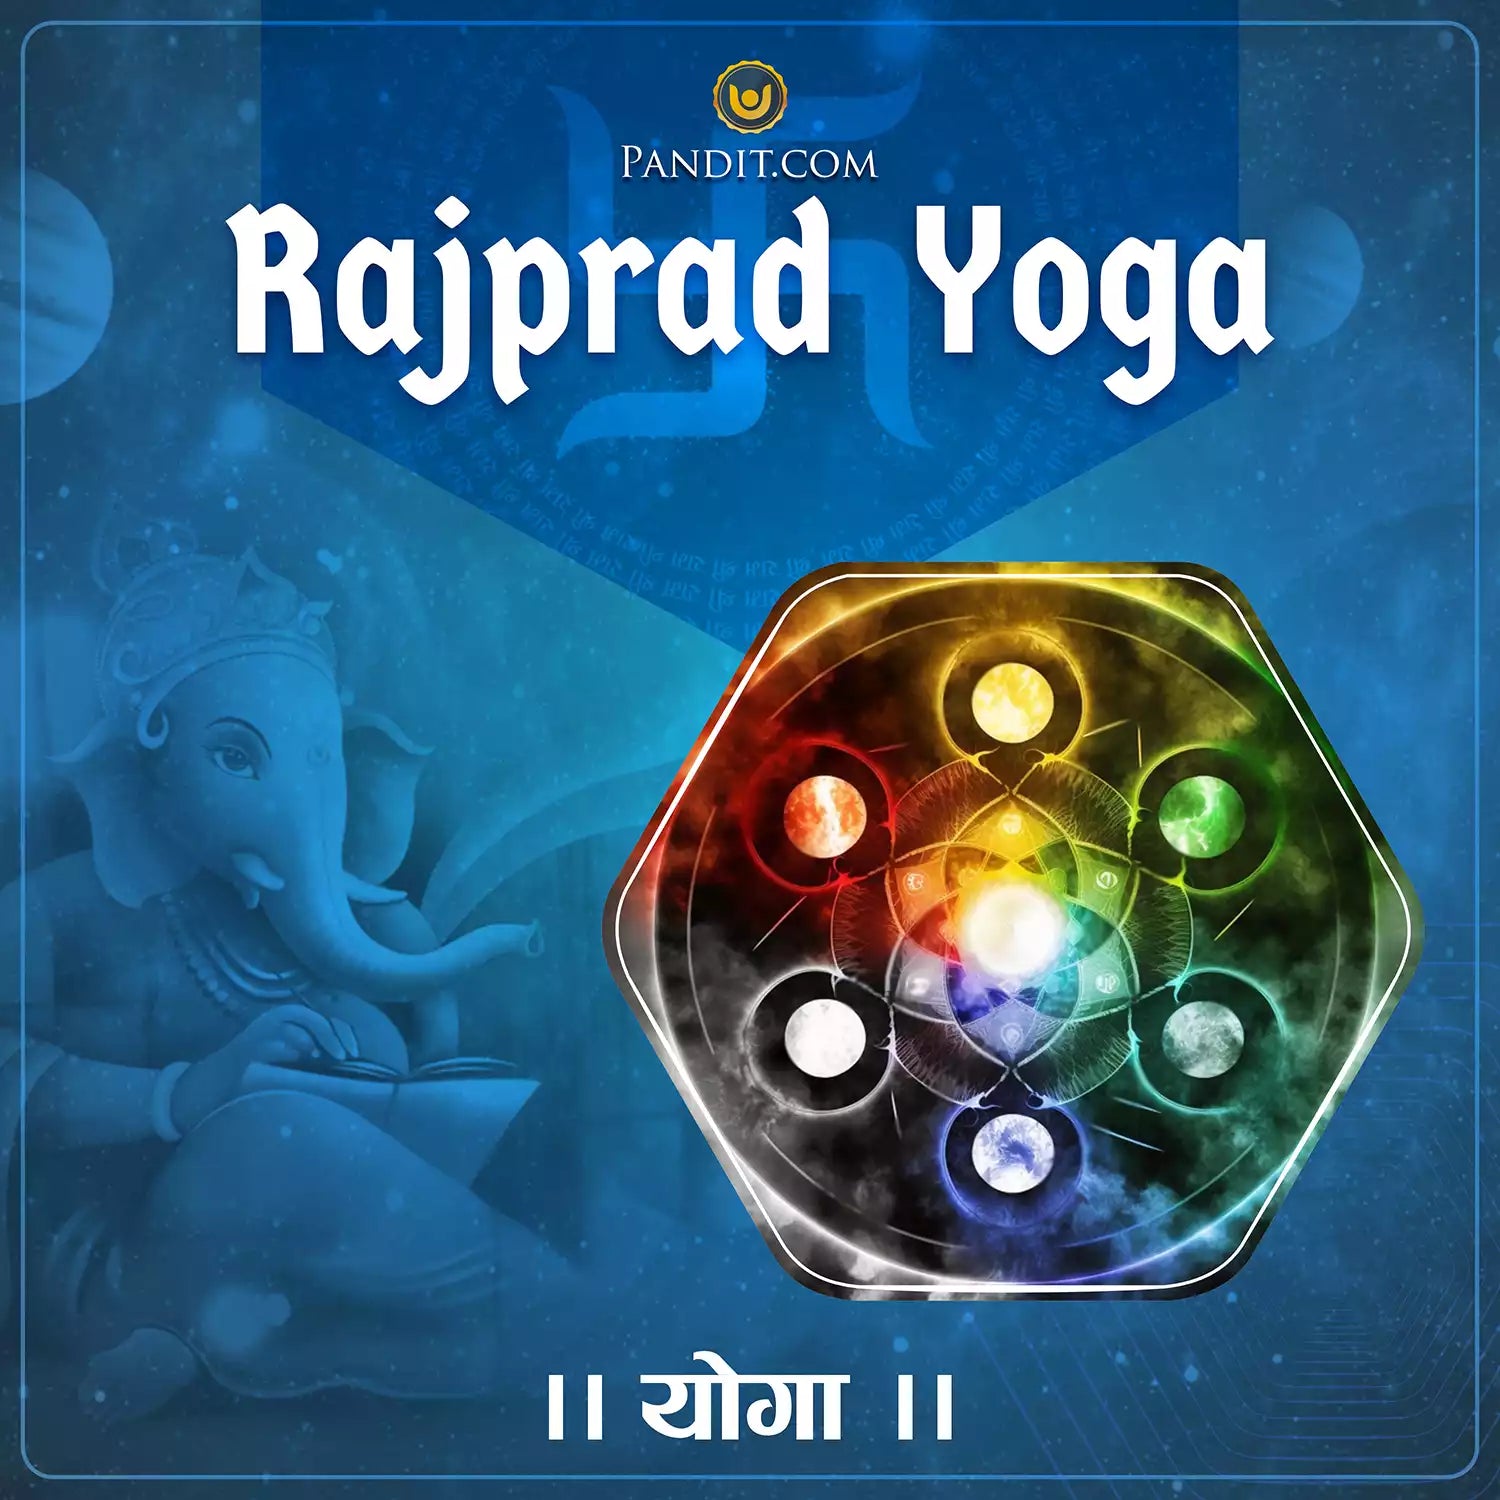 Rajprad Yoga